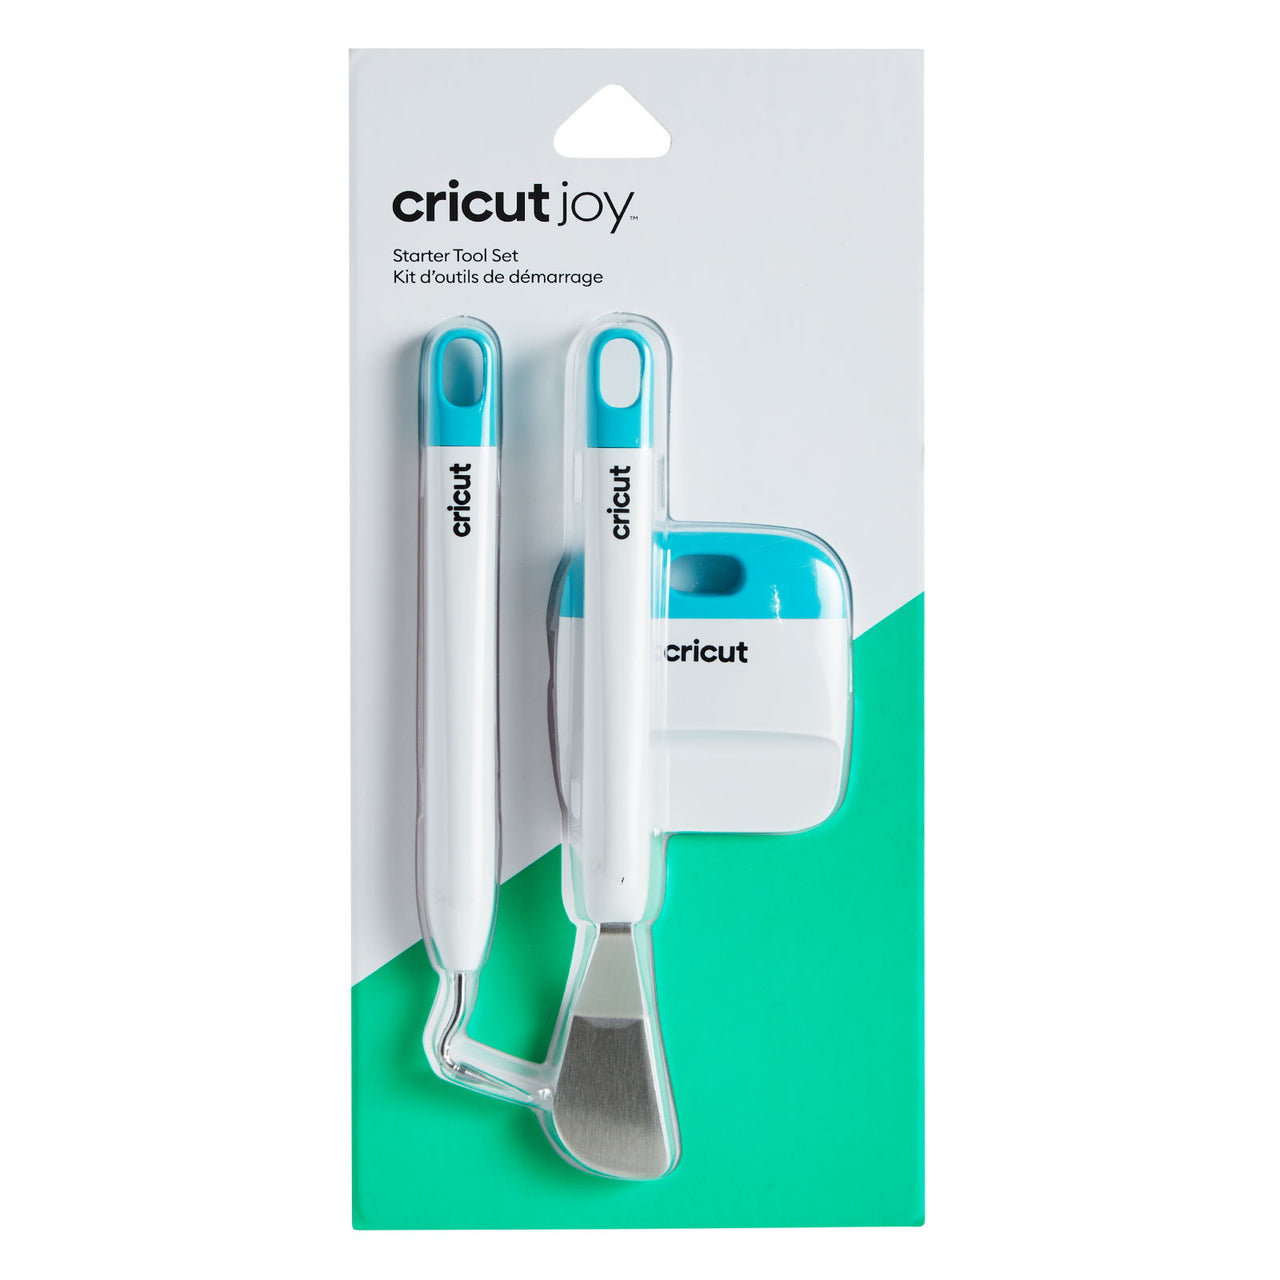 Cricut Tools Set 5-pc Scissors Tweezer Scraper Spatula Weeder - Damage